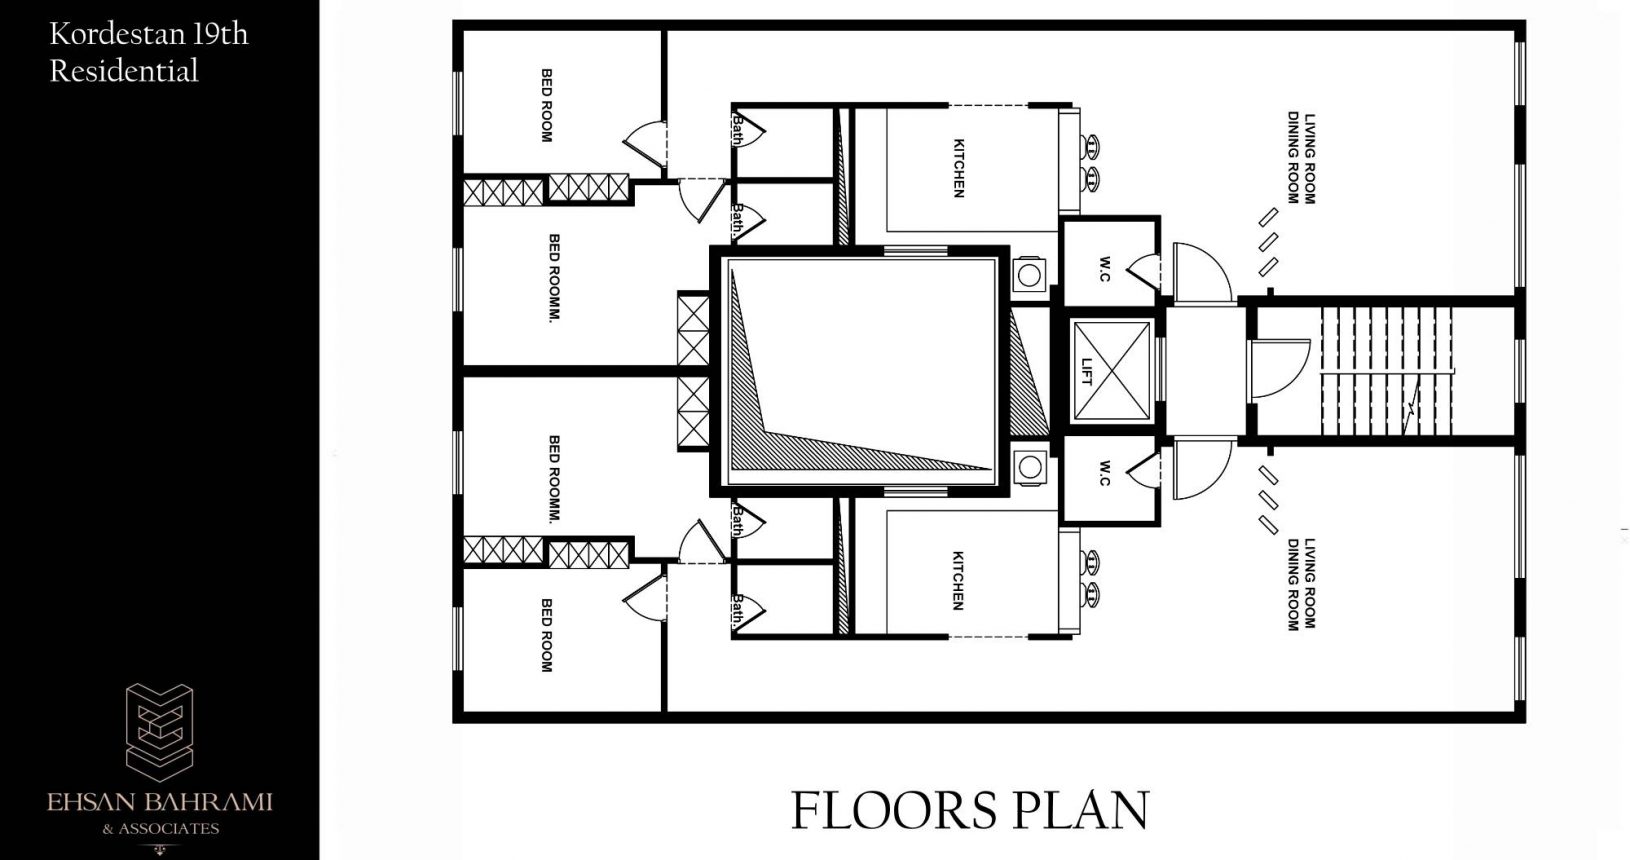 19th kordestan Floors Plan